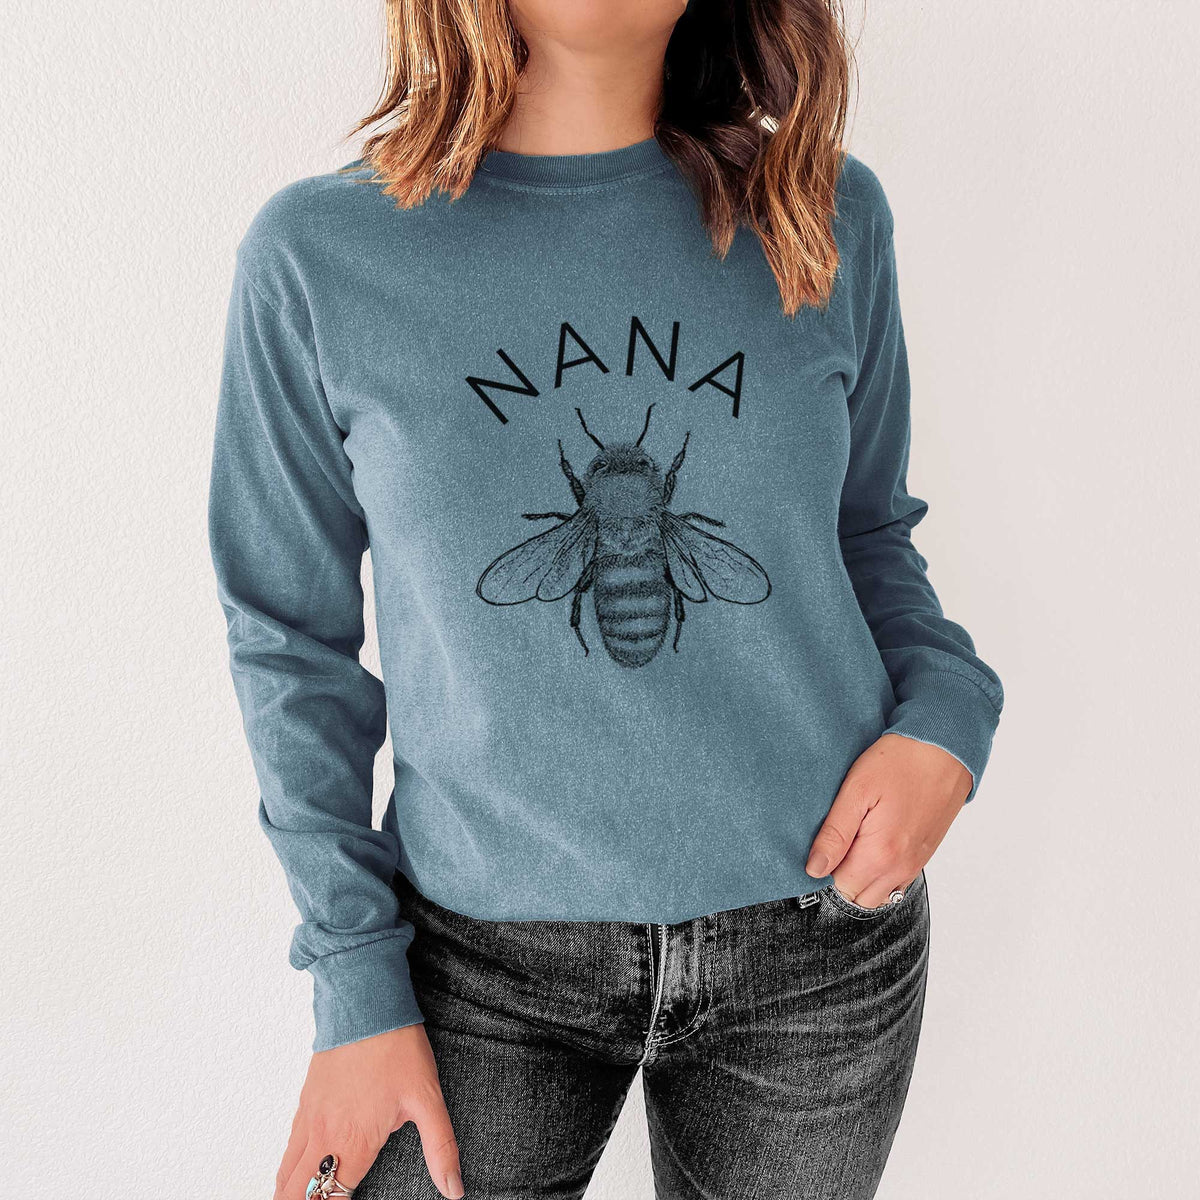 Nana Bee - Heavyweight 100% Cotton Long Sleeve